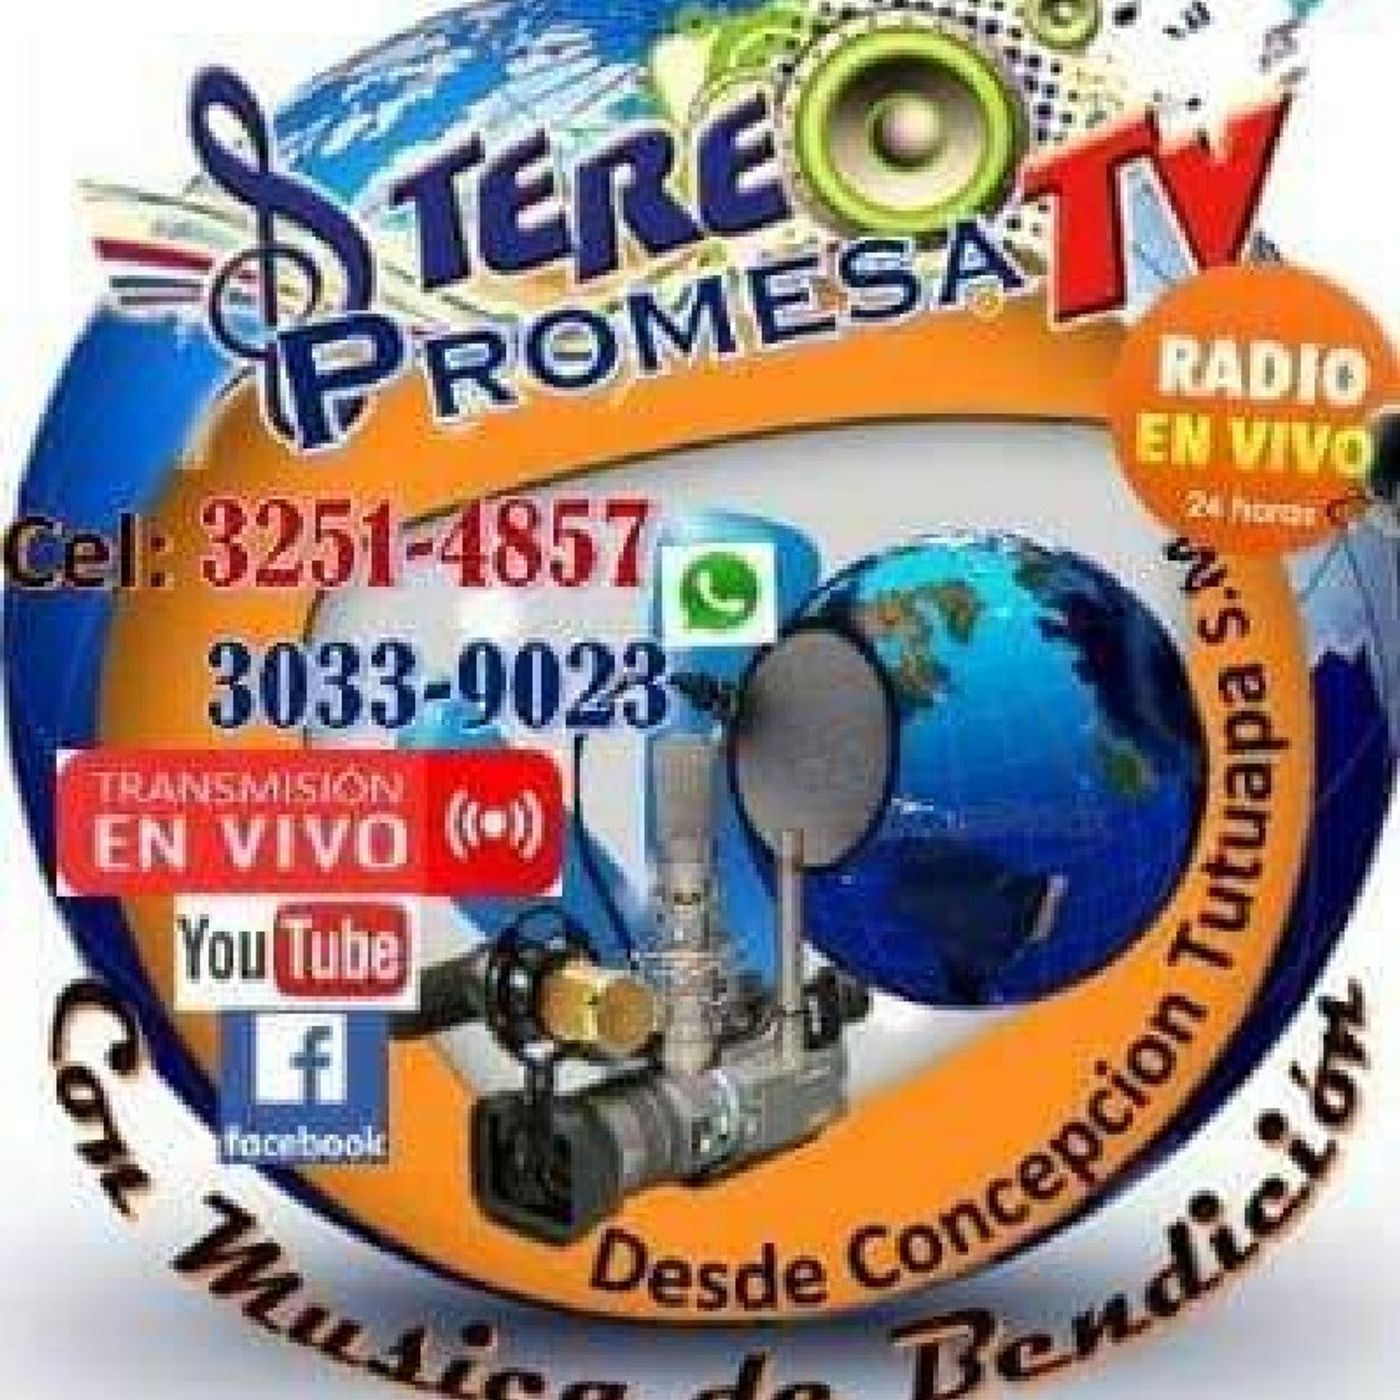 Stereo PROMESA.